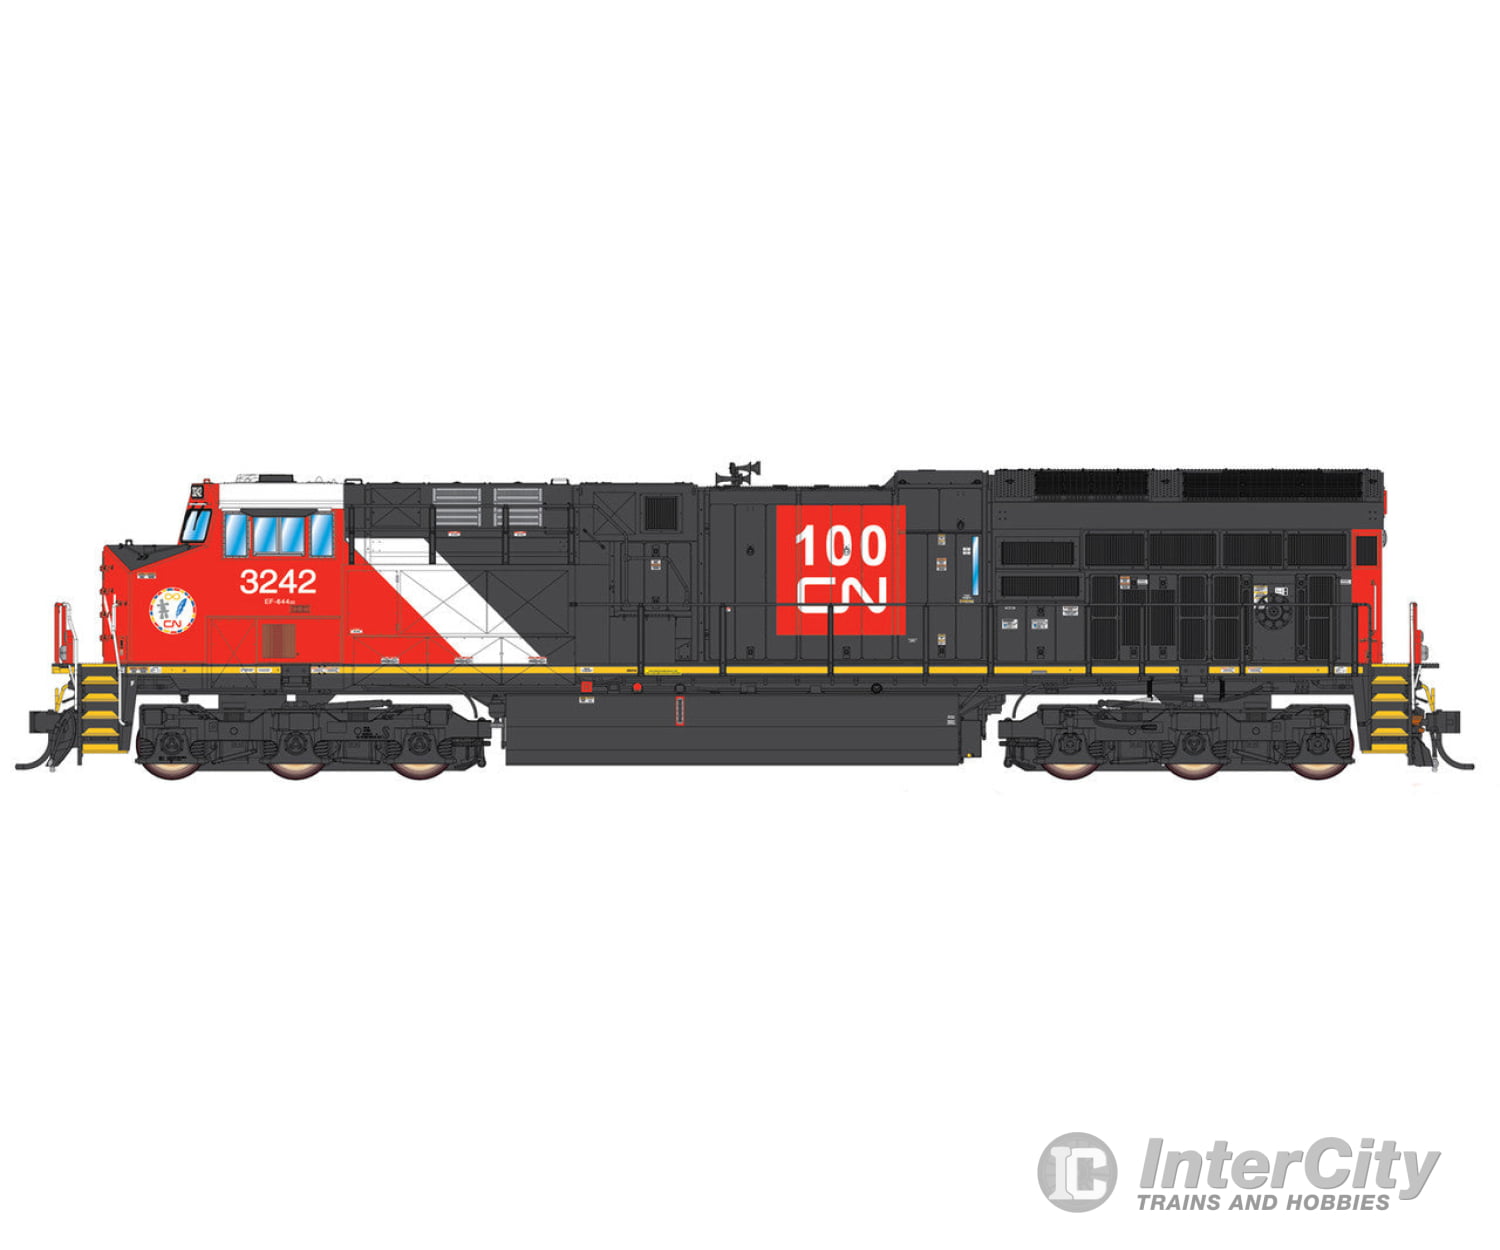 Intermountain 497108S-02 Ho Tier 4 Locomotive W/Sound - Cn 100Th Anniversary Dcc & Sound Road #3221